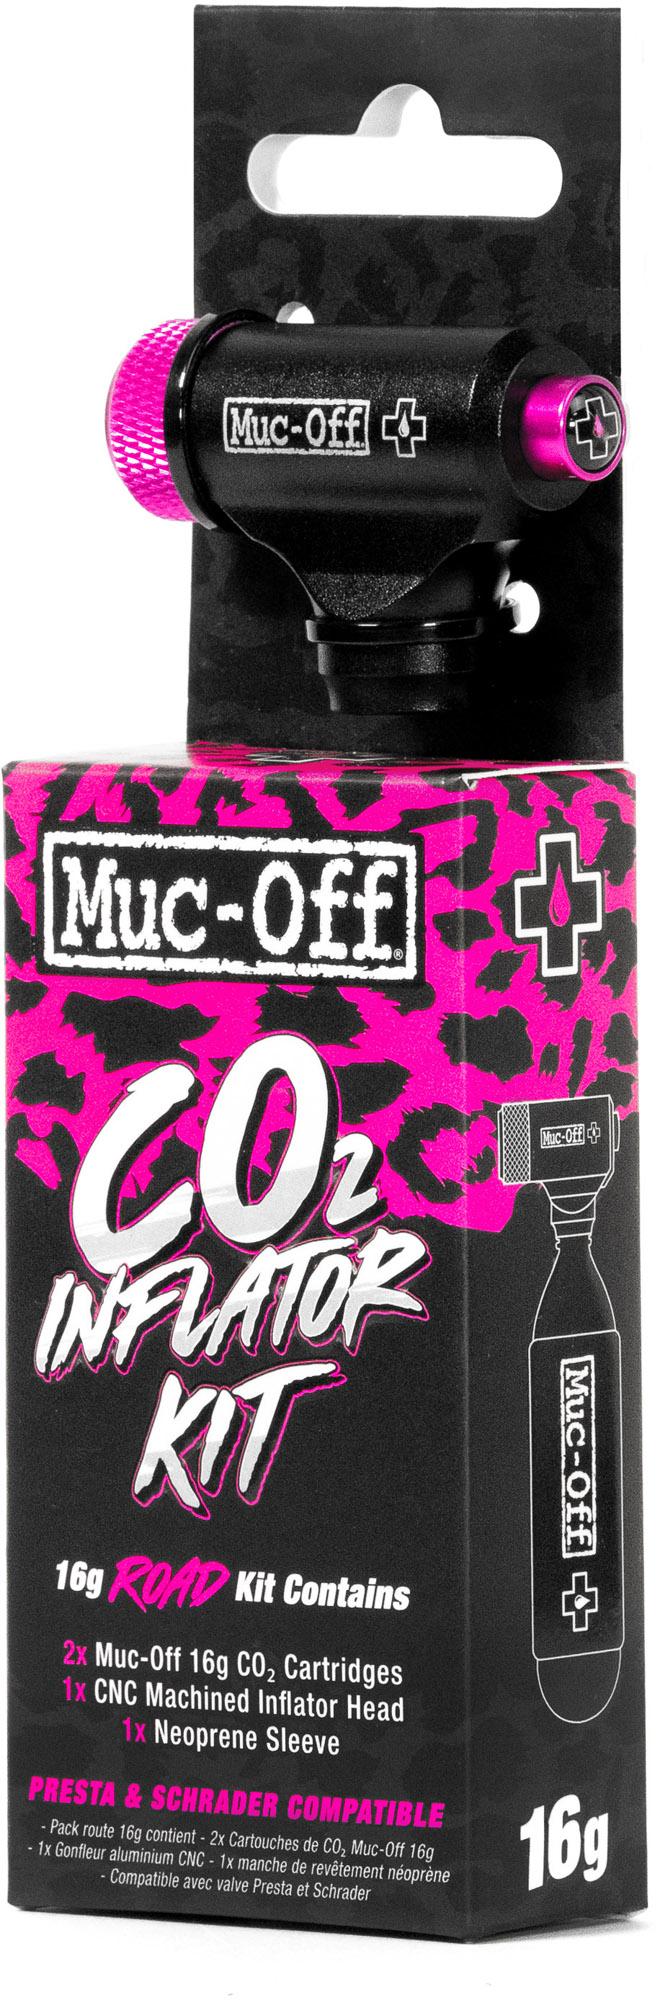 Muc-off Road Co2 Inflator Kit - Black